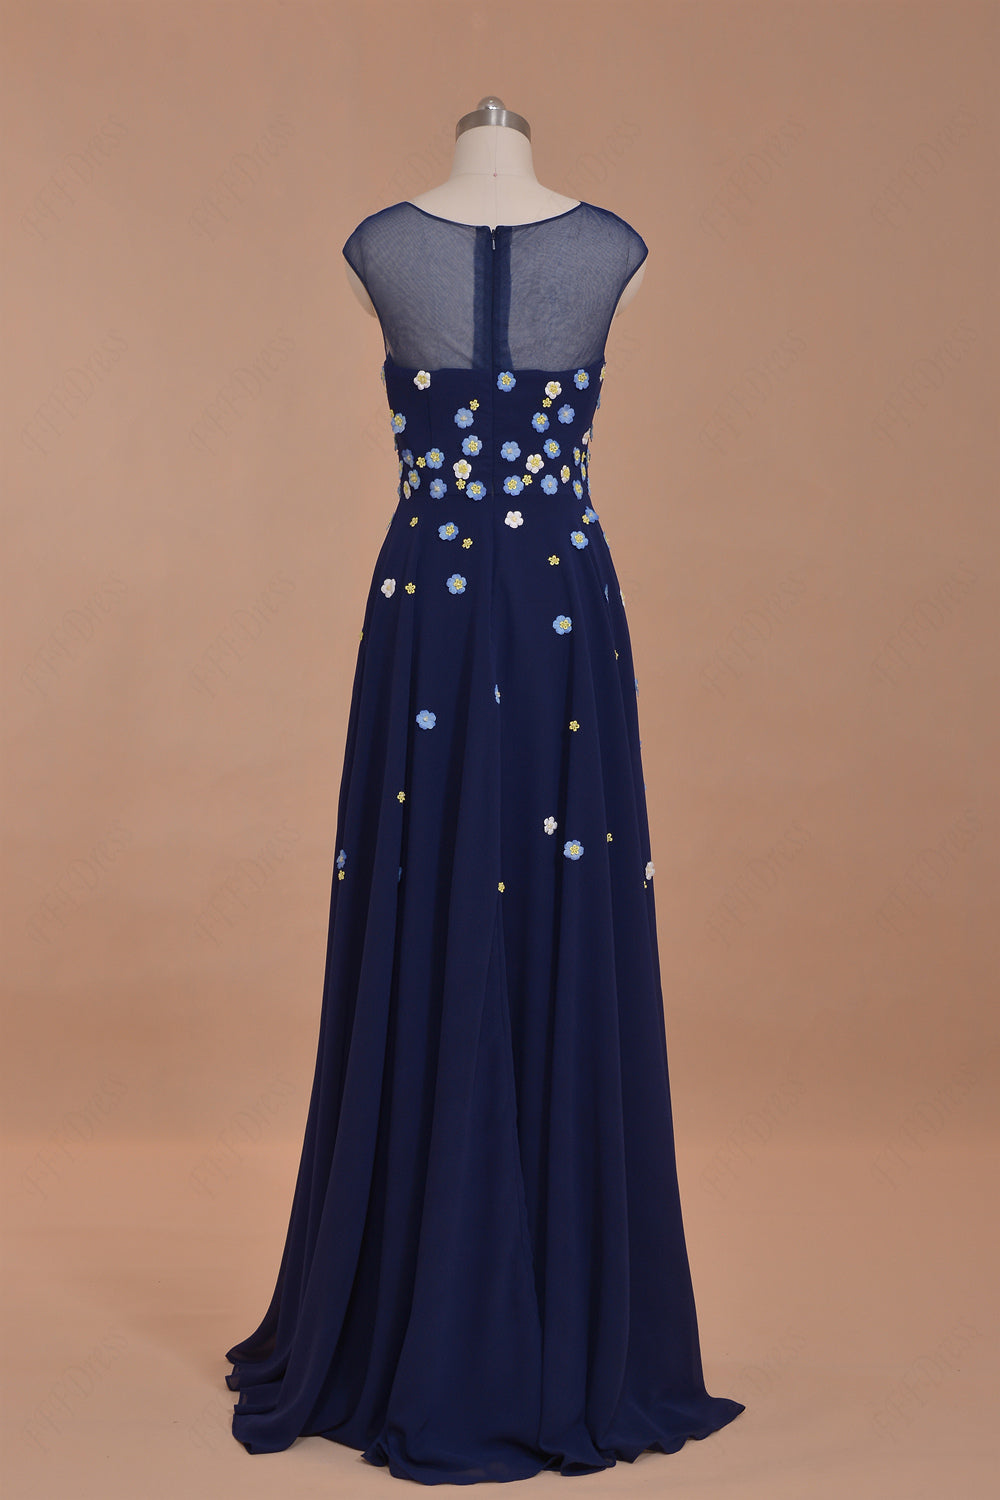 Floral navy blue long prom dresses